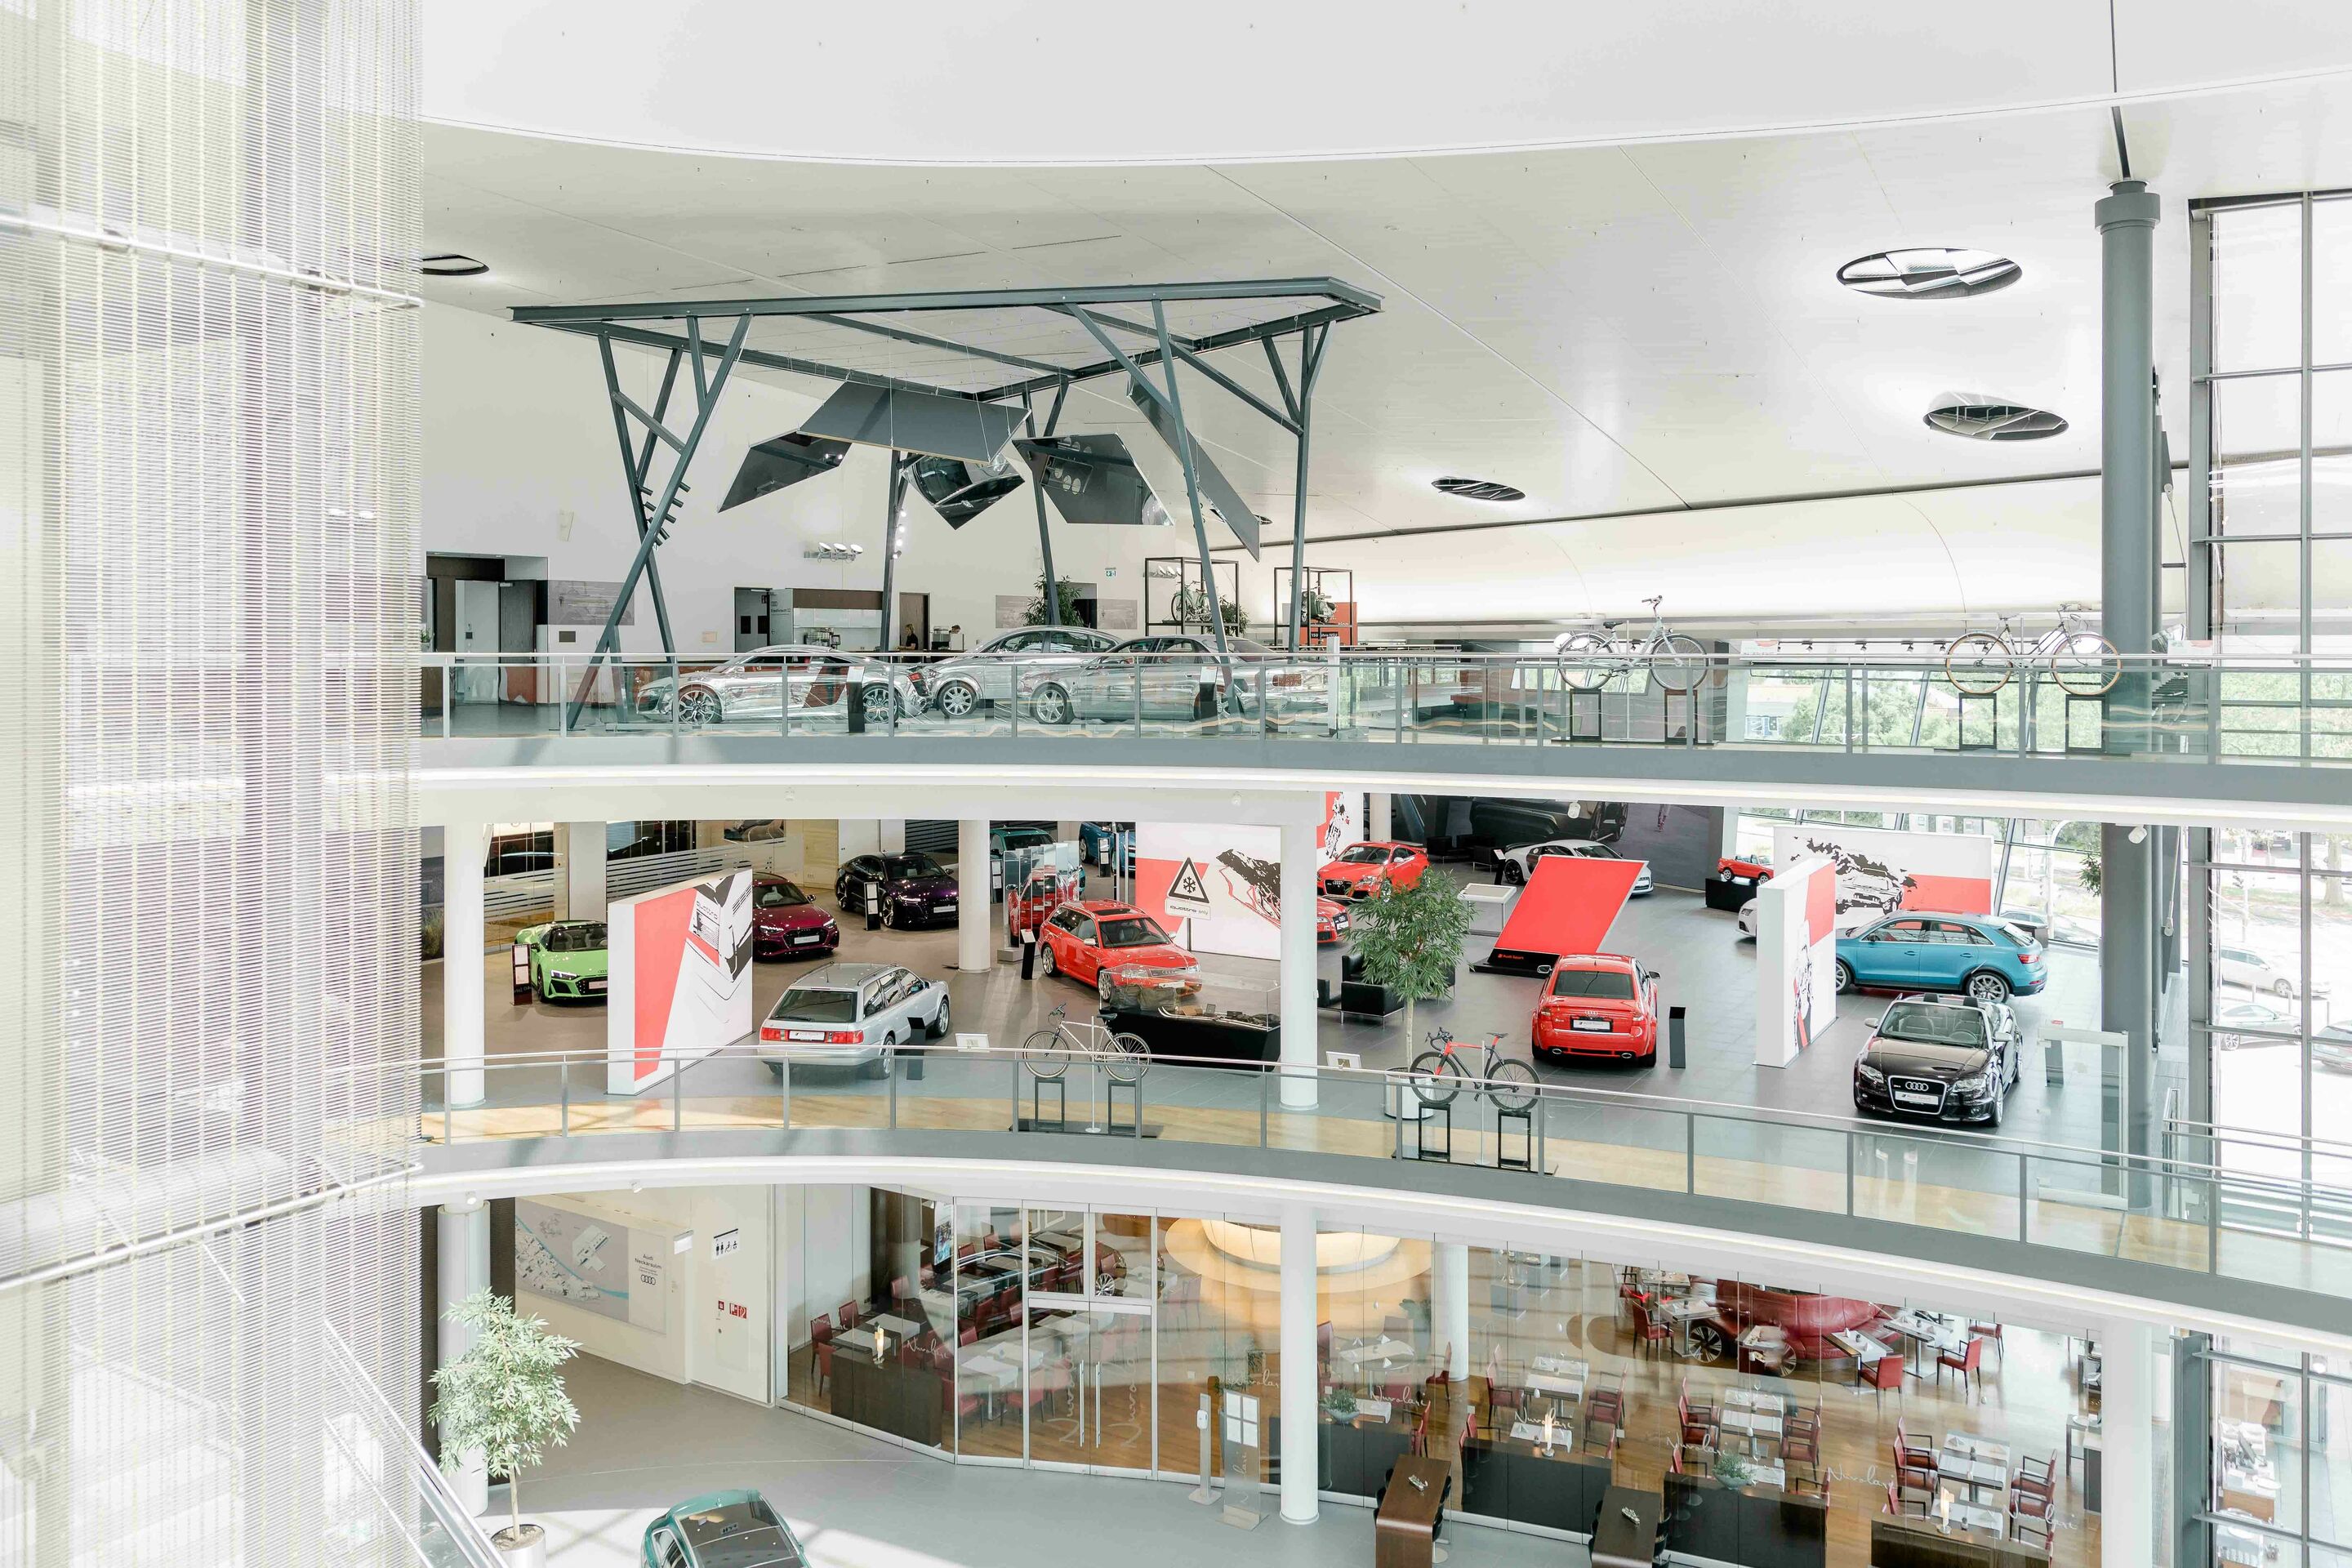 40 years Audi Sport GmbH